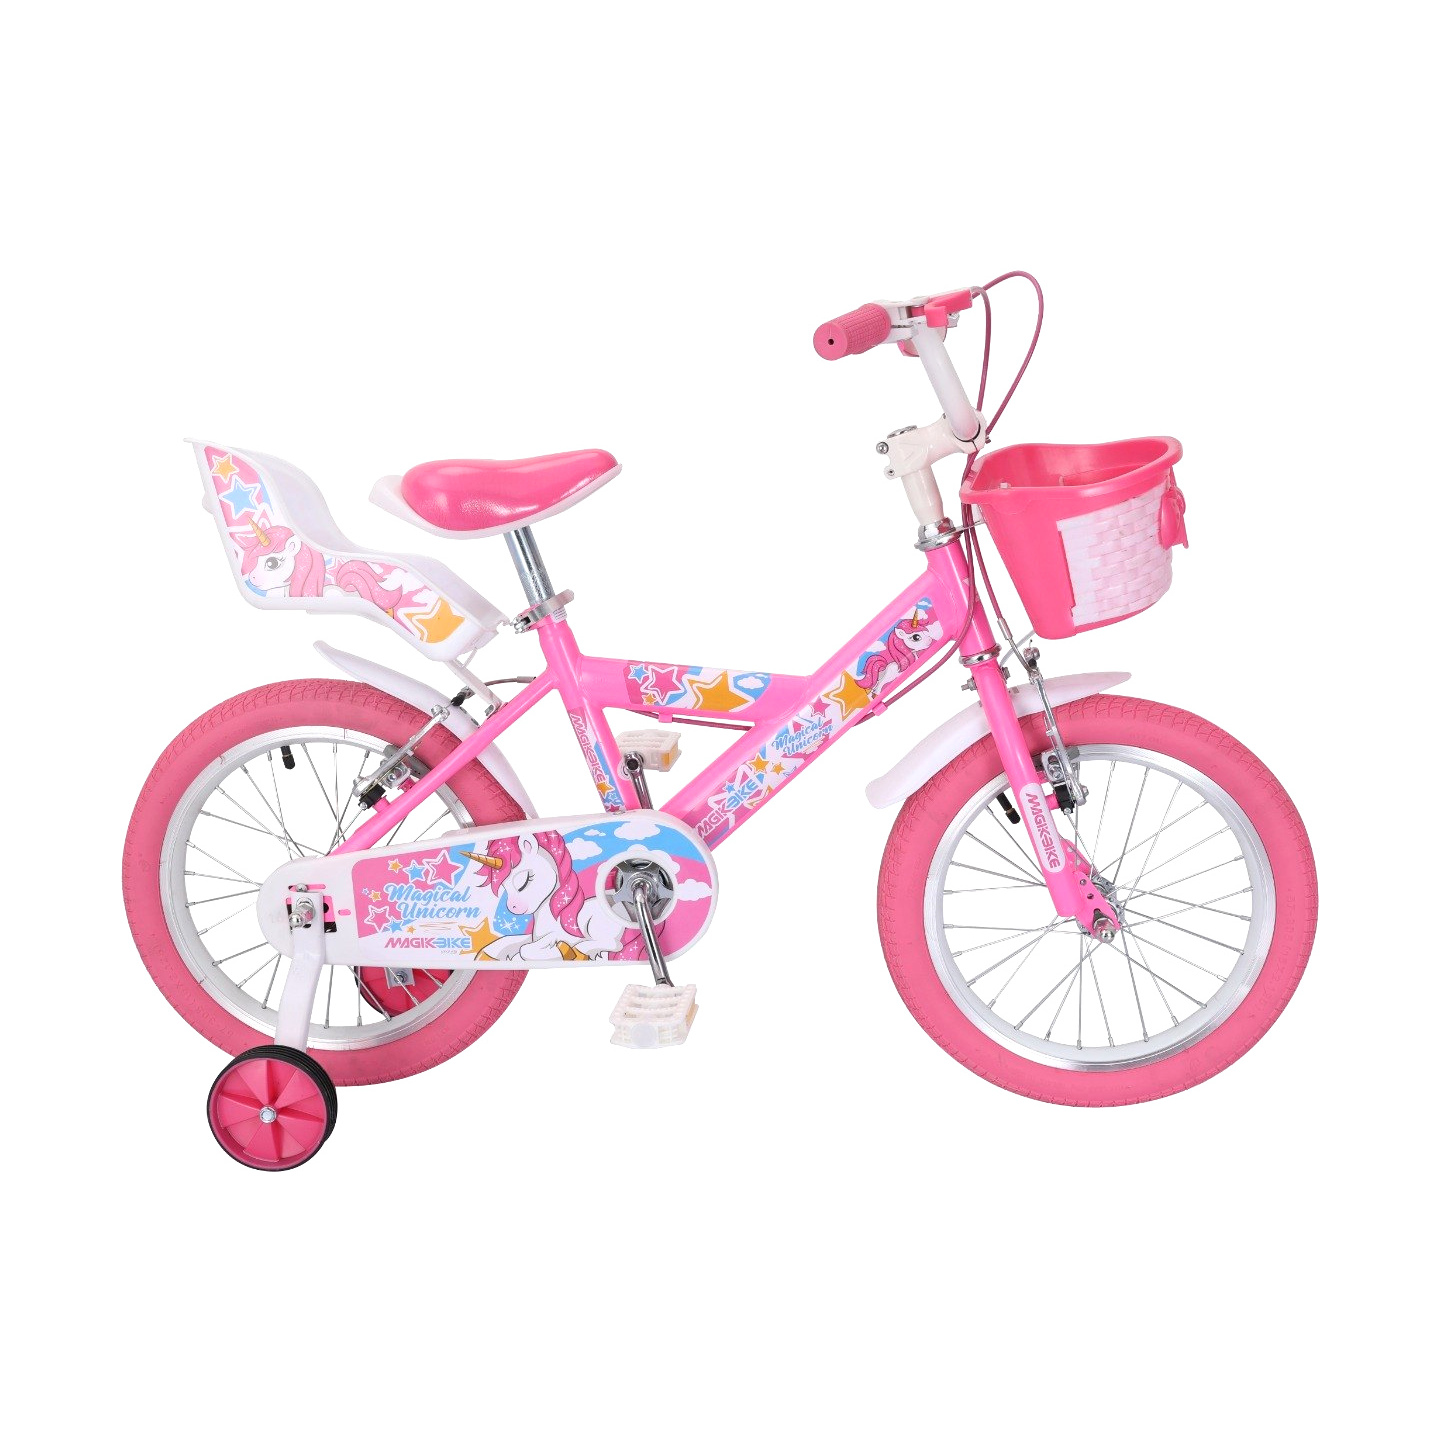 Bicicleta Niños 12 Pulgadas Magikbike Unicorn 3-5 Años - rosa - 